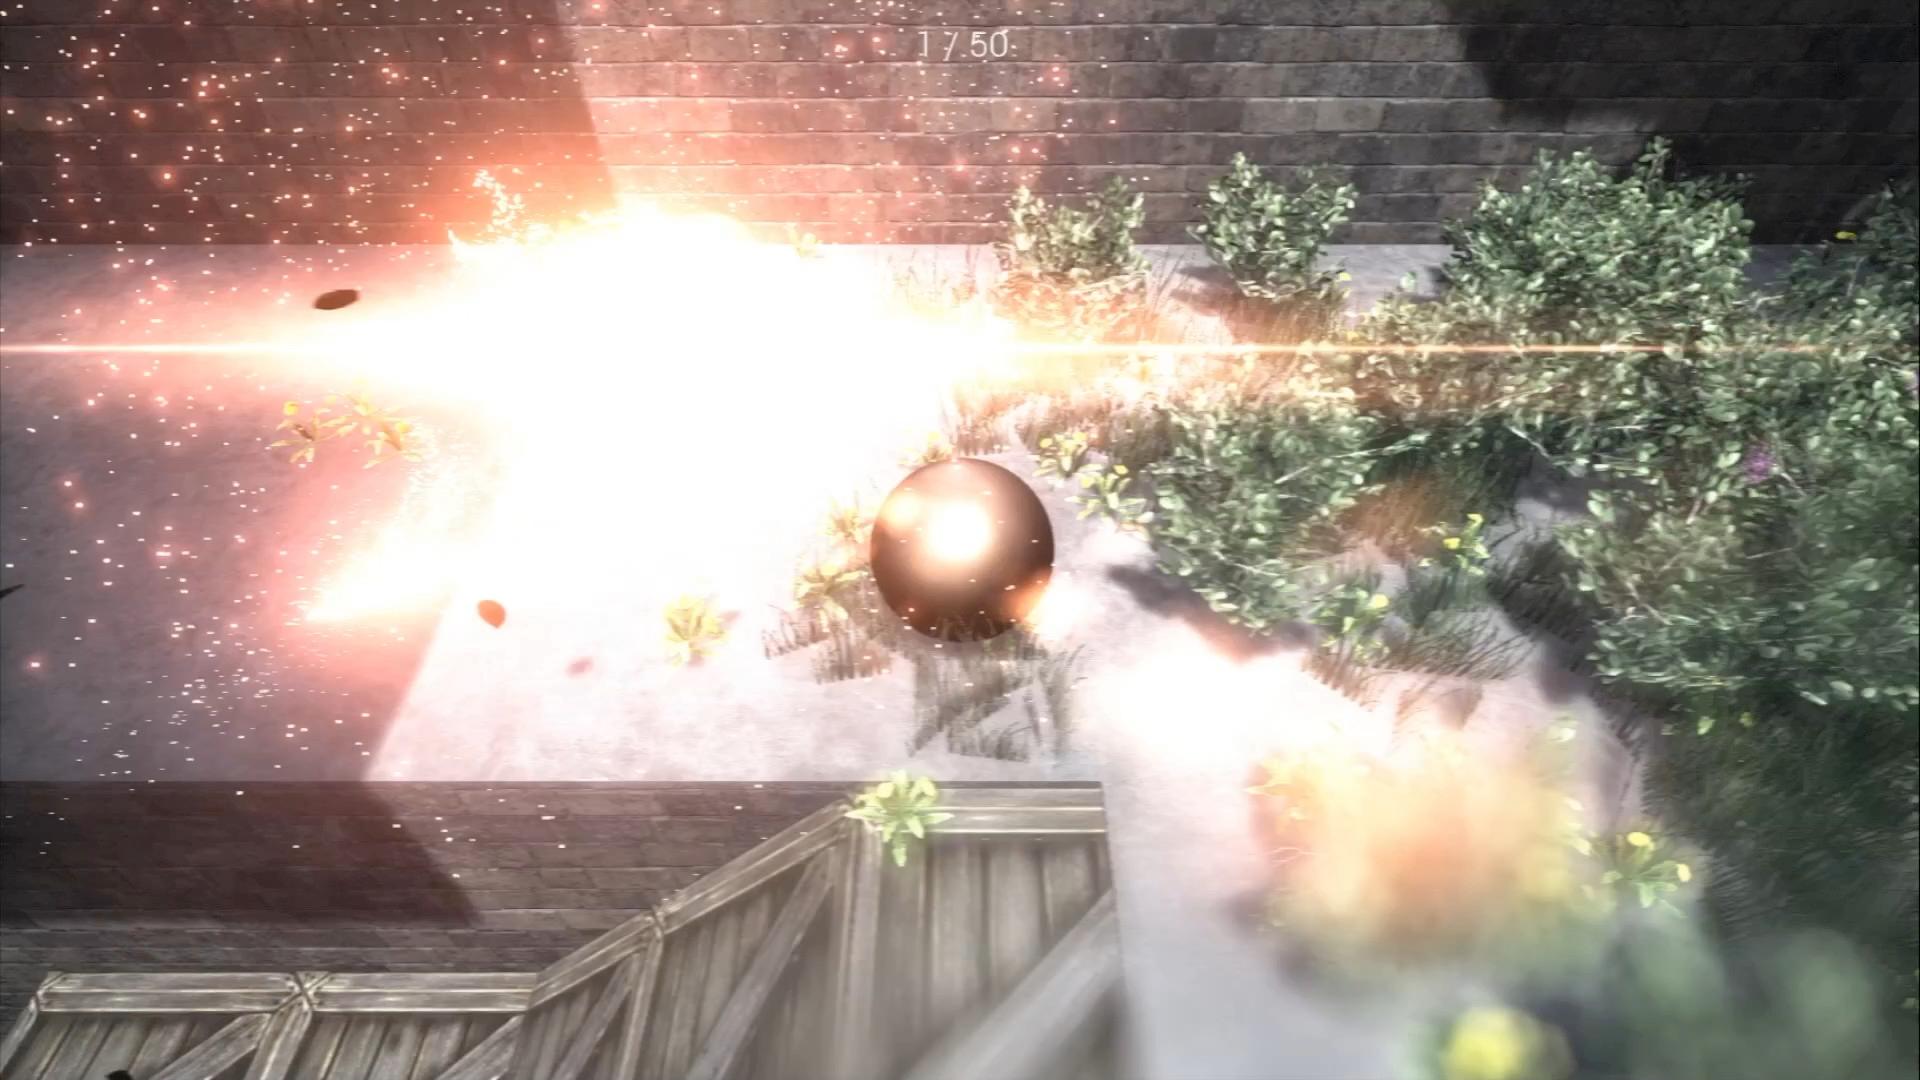 Screenshot №4 from game ZRoll